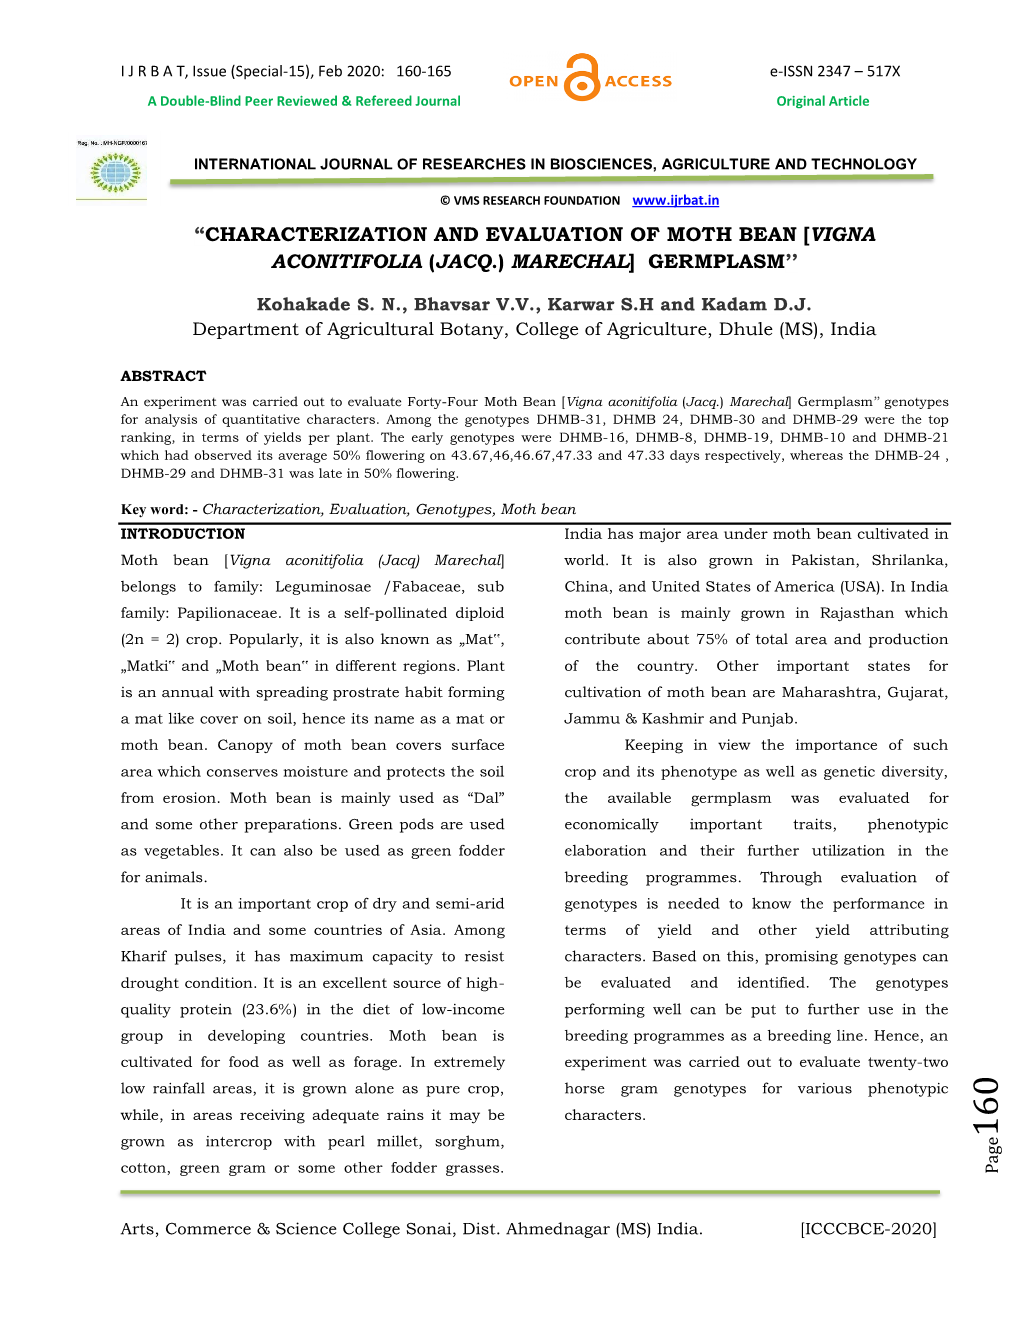 Characterization and Evaluation of Moth Bean [Vigna Aconitifolia (Jacq.) Marechal] Germplasm’’